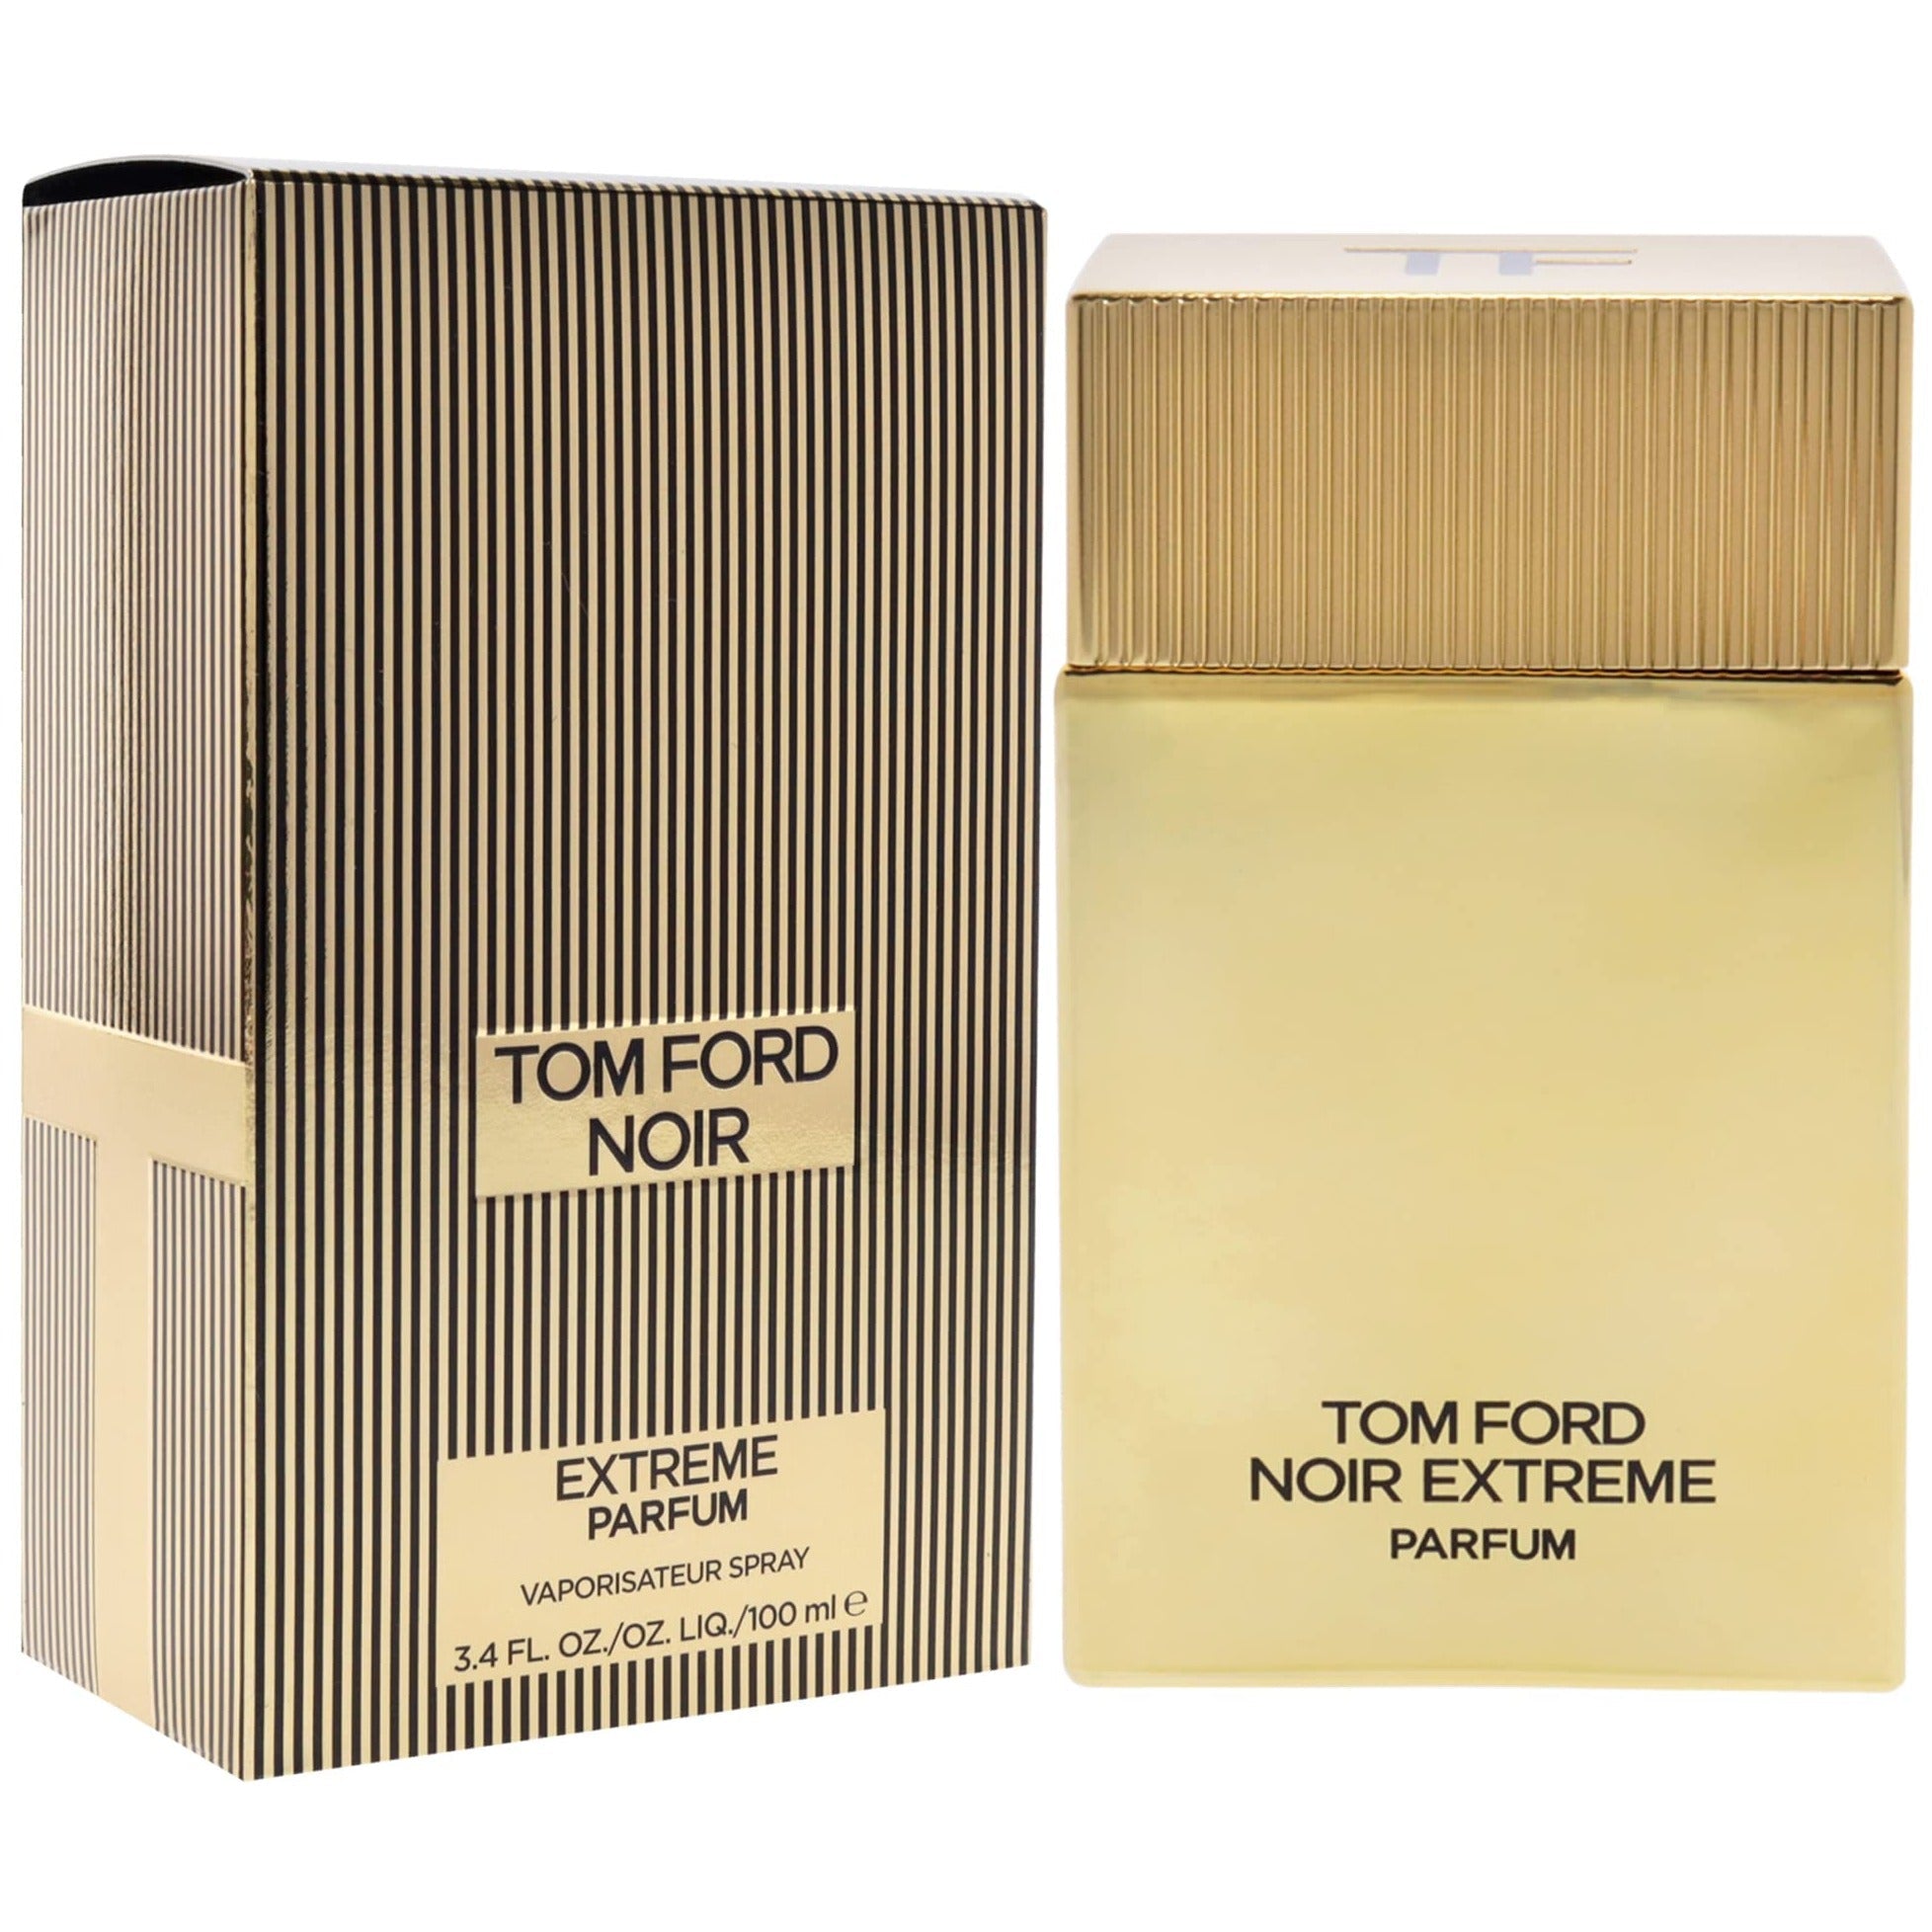 Tom Ford Noir Extreme Parfum | My Perfume Shop Australia